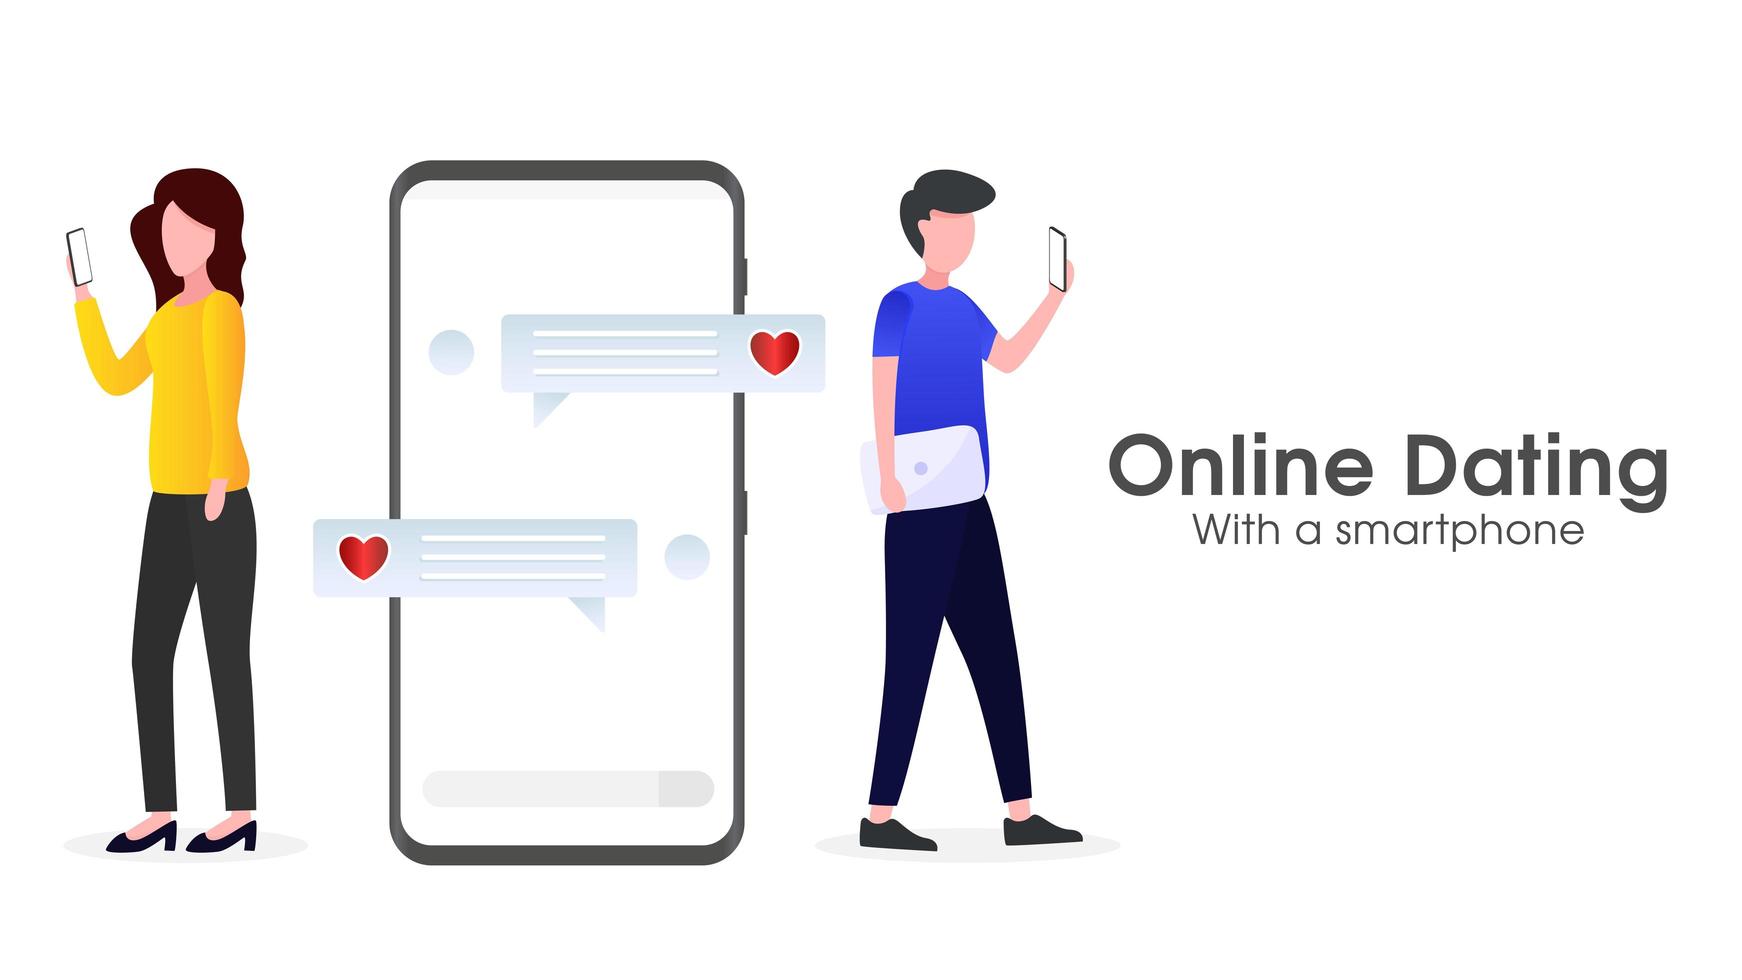 Mobile application for online dating vector